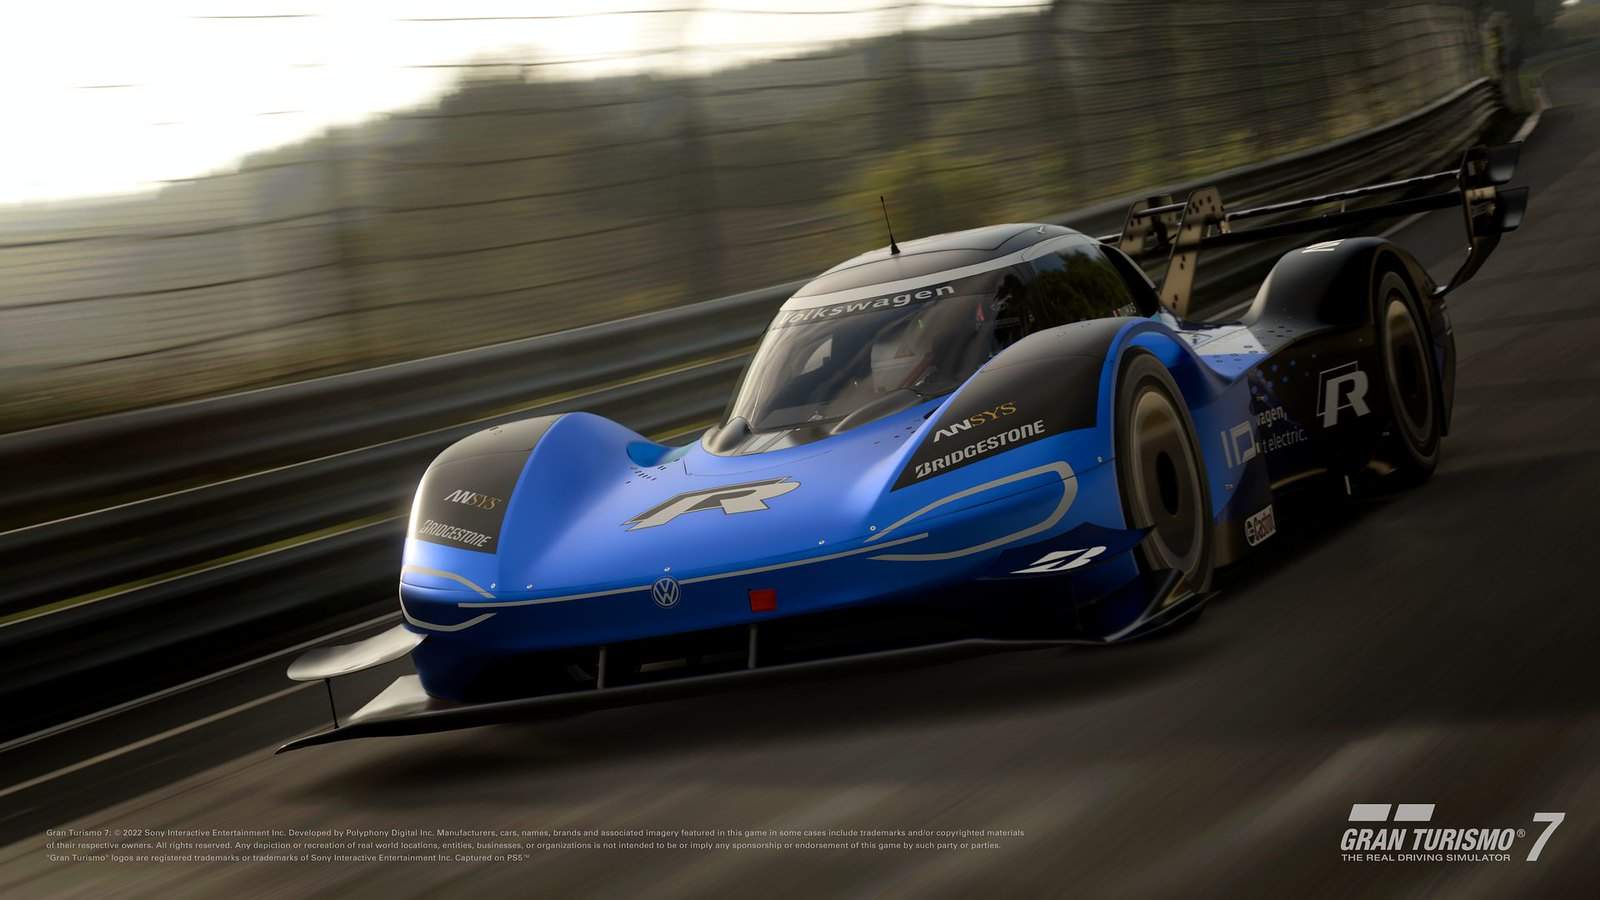 Gran Turismo 7 Update 1.23 bringt drei neue Autos